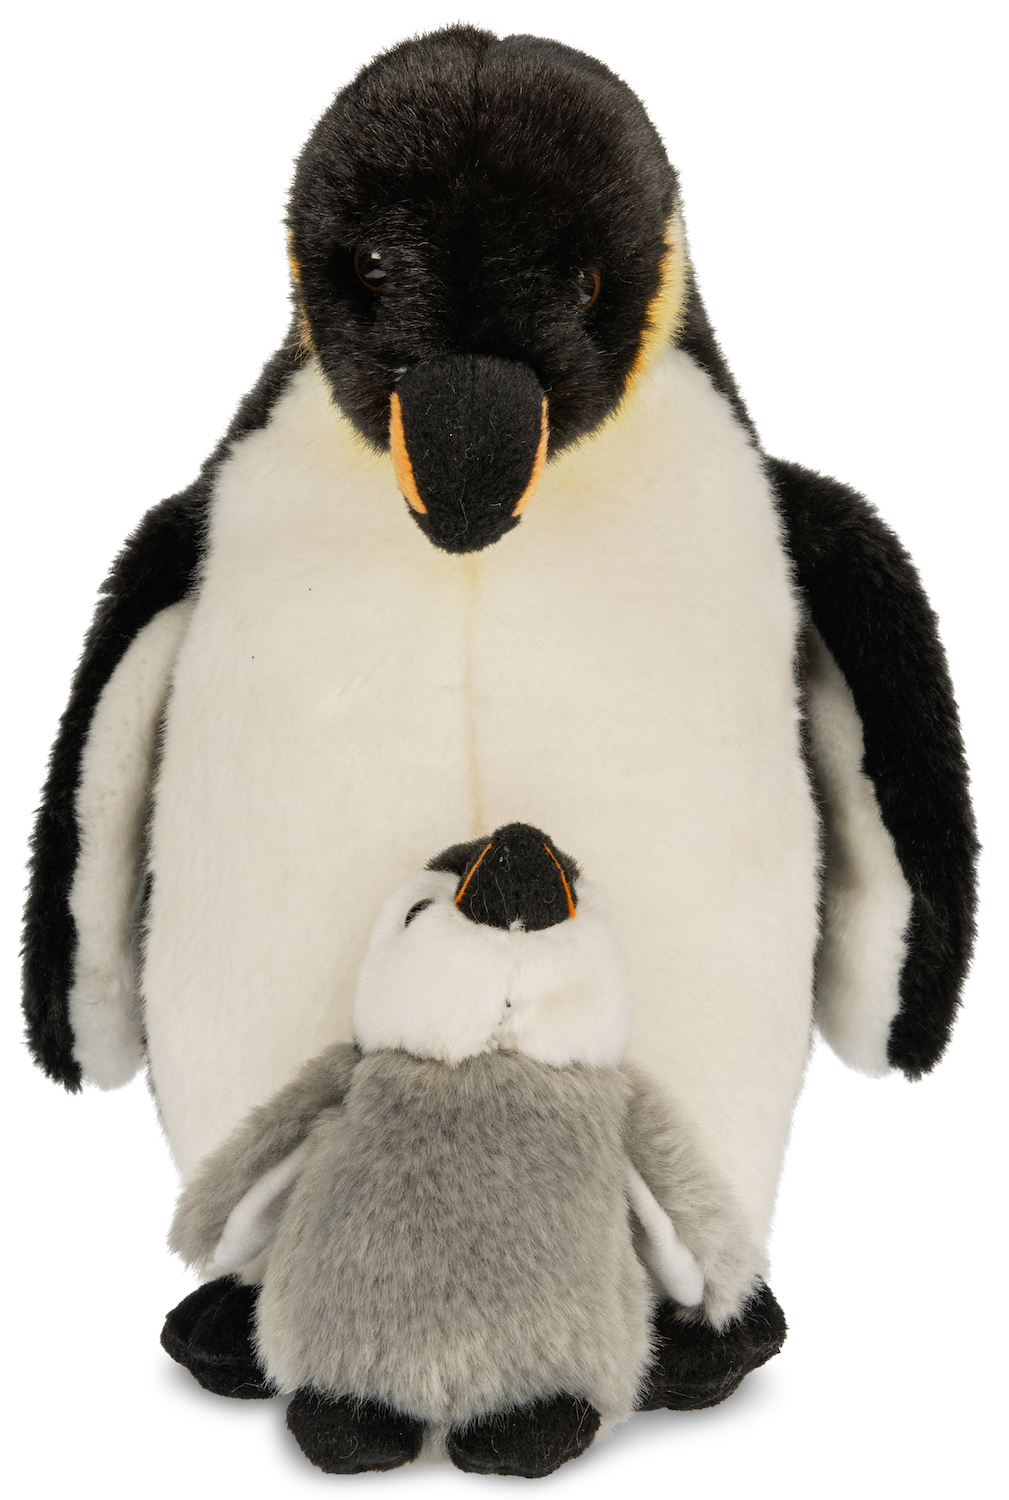 Emperor penguin with baby - 26 cm (height)